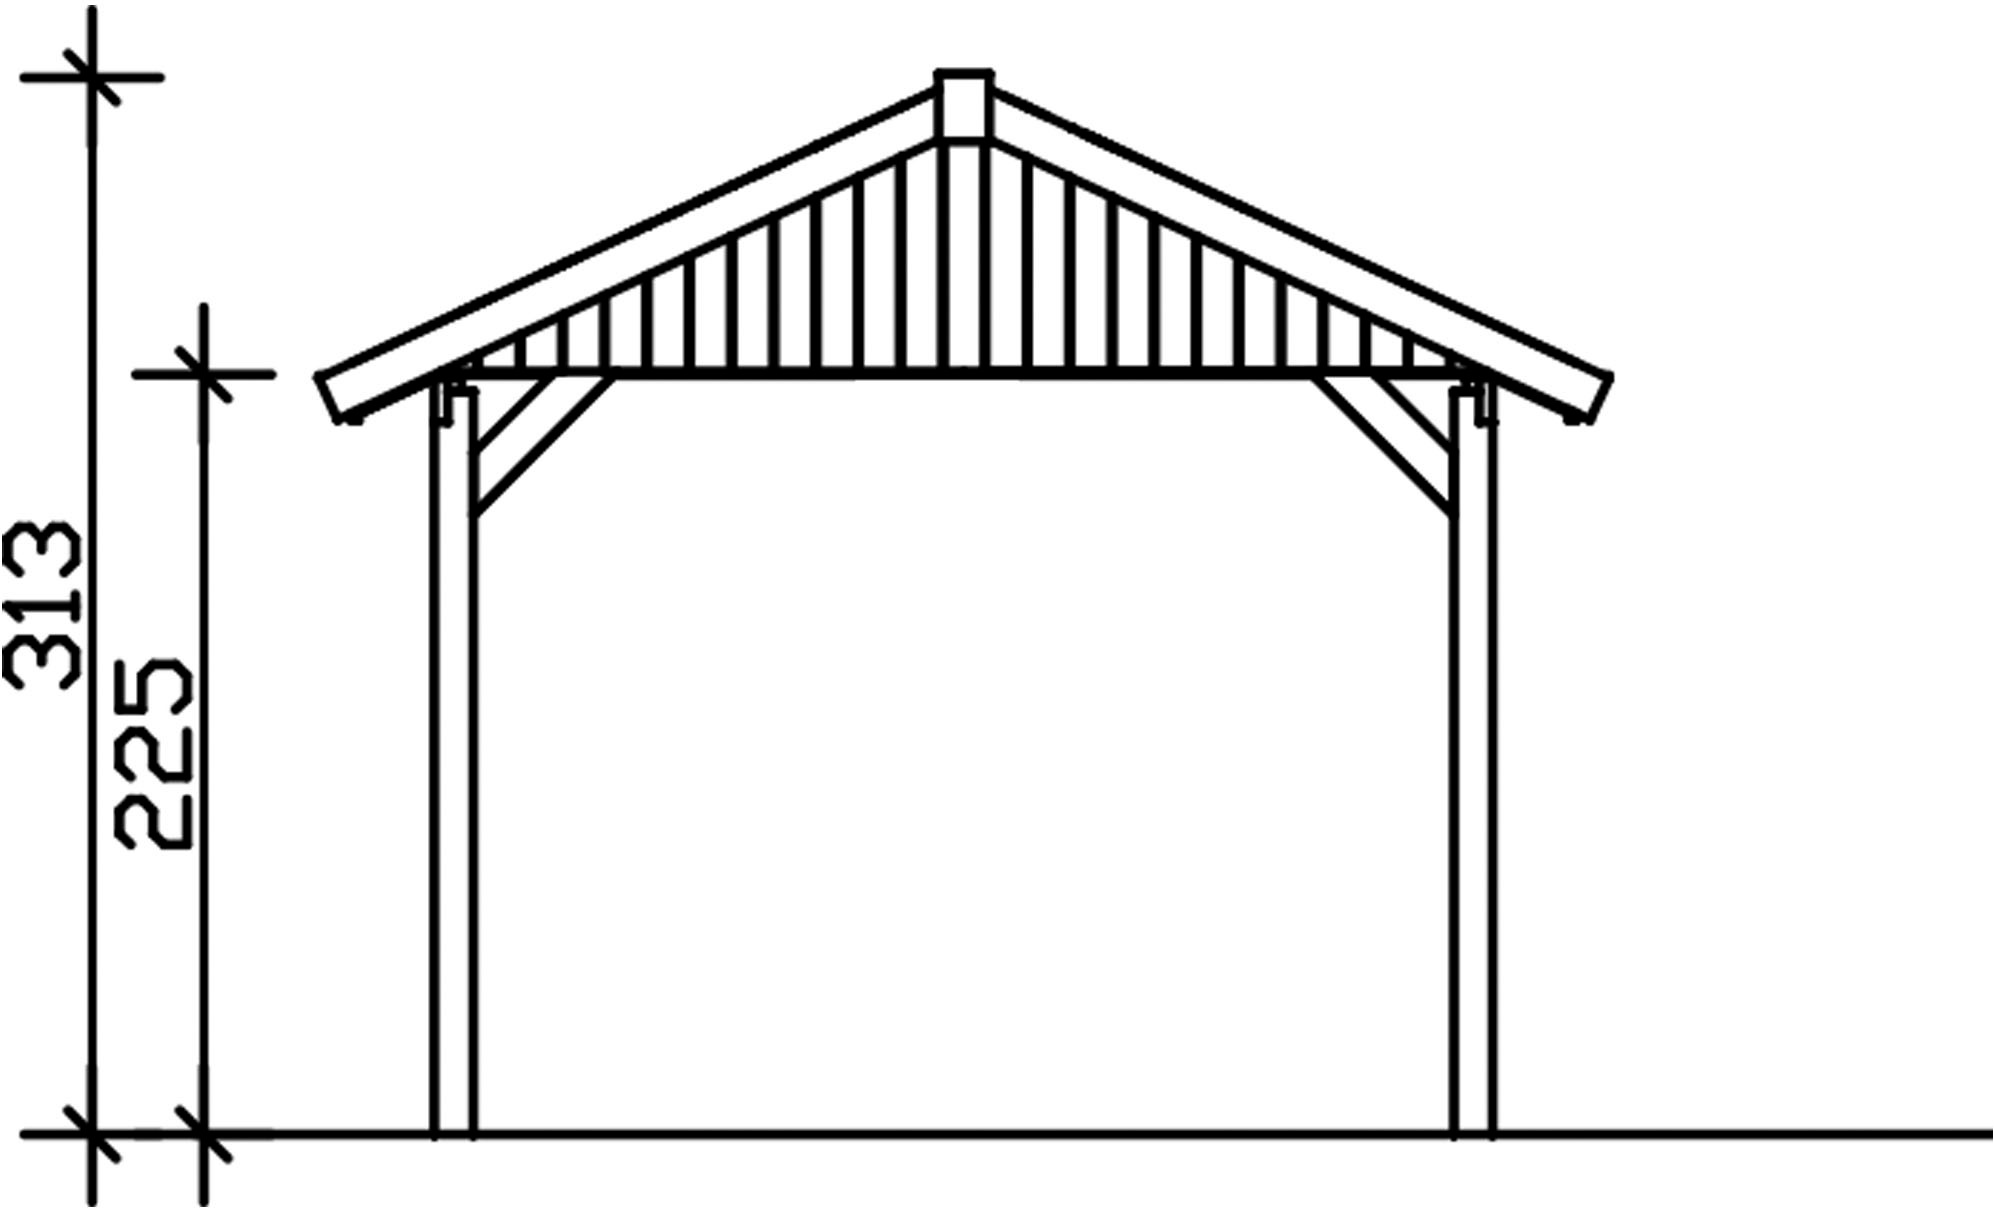 Skanholz Einzelcarport »Wallgau«, Nadelholz, 291 cm, Grün, 380x600cm, mit Dachlattung